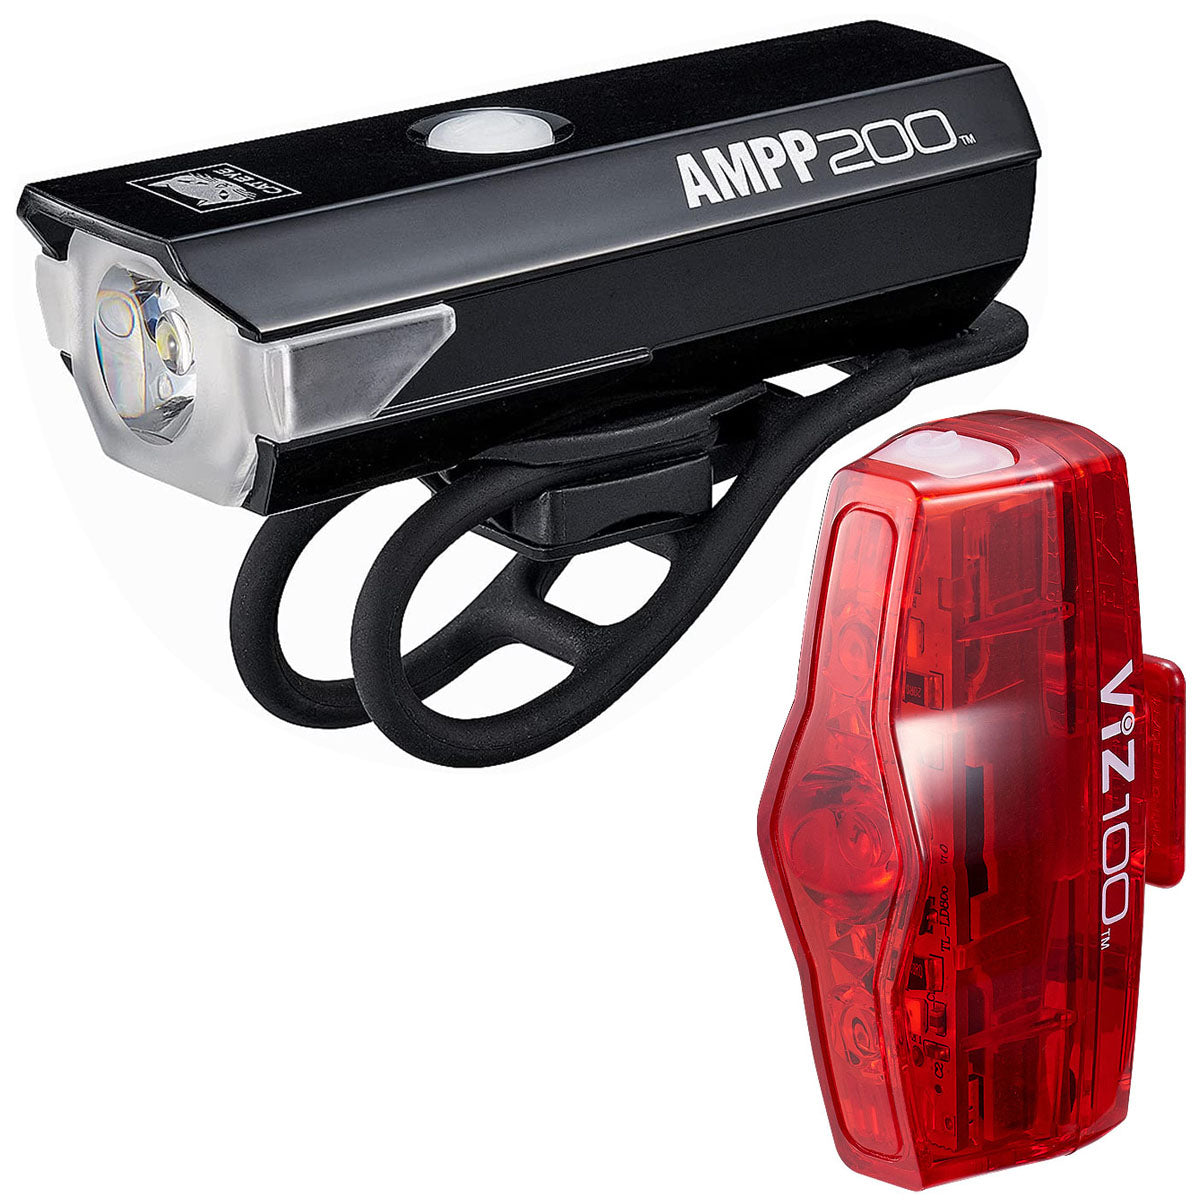 CatEye Headlight and Rear Light Combo Kit - AMPP200/ViZ100 Cateye